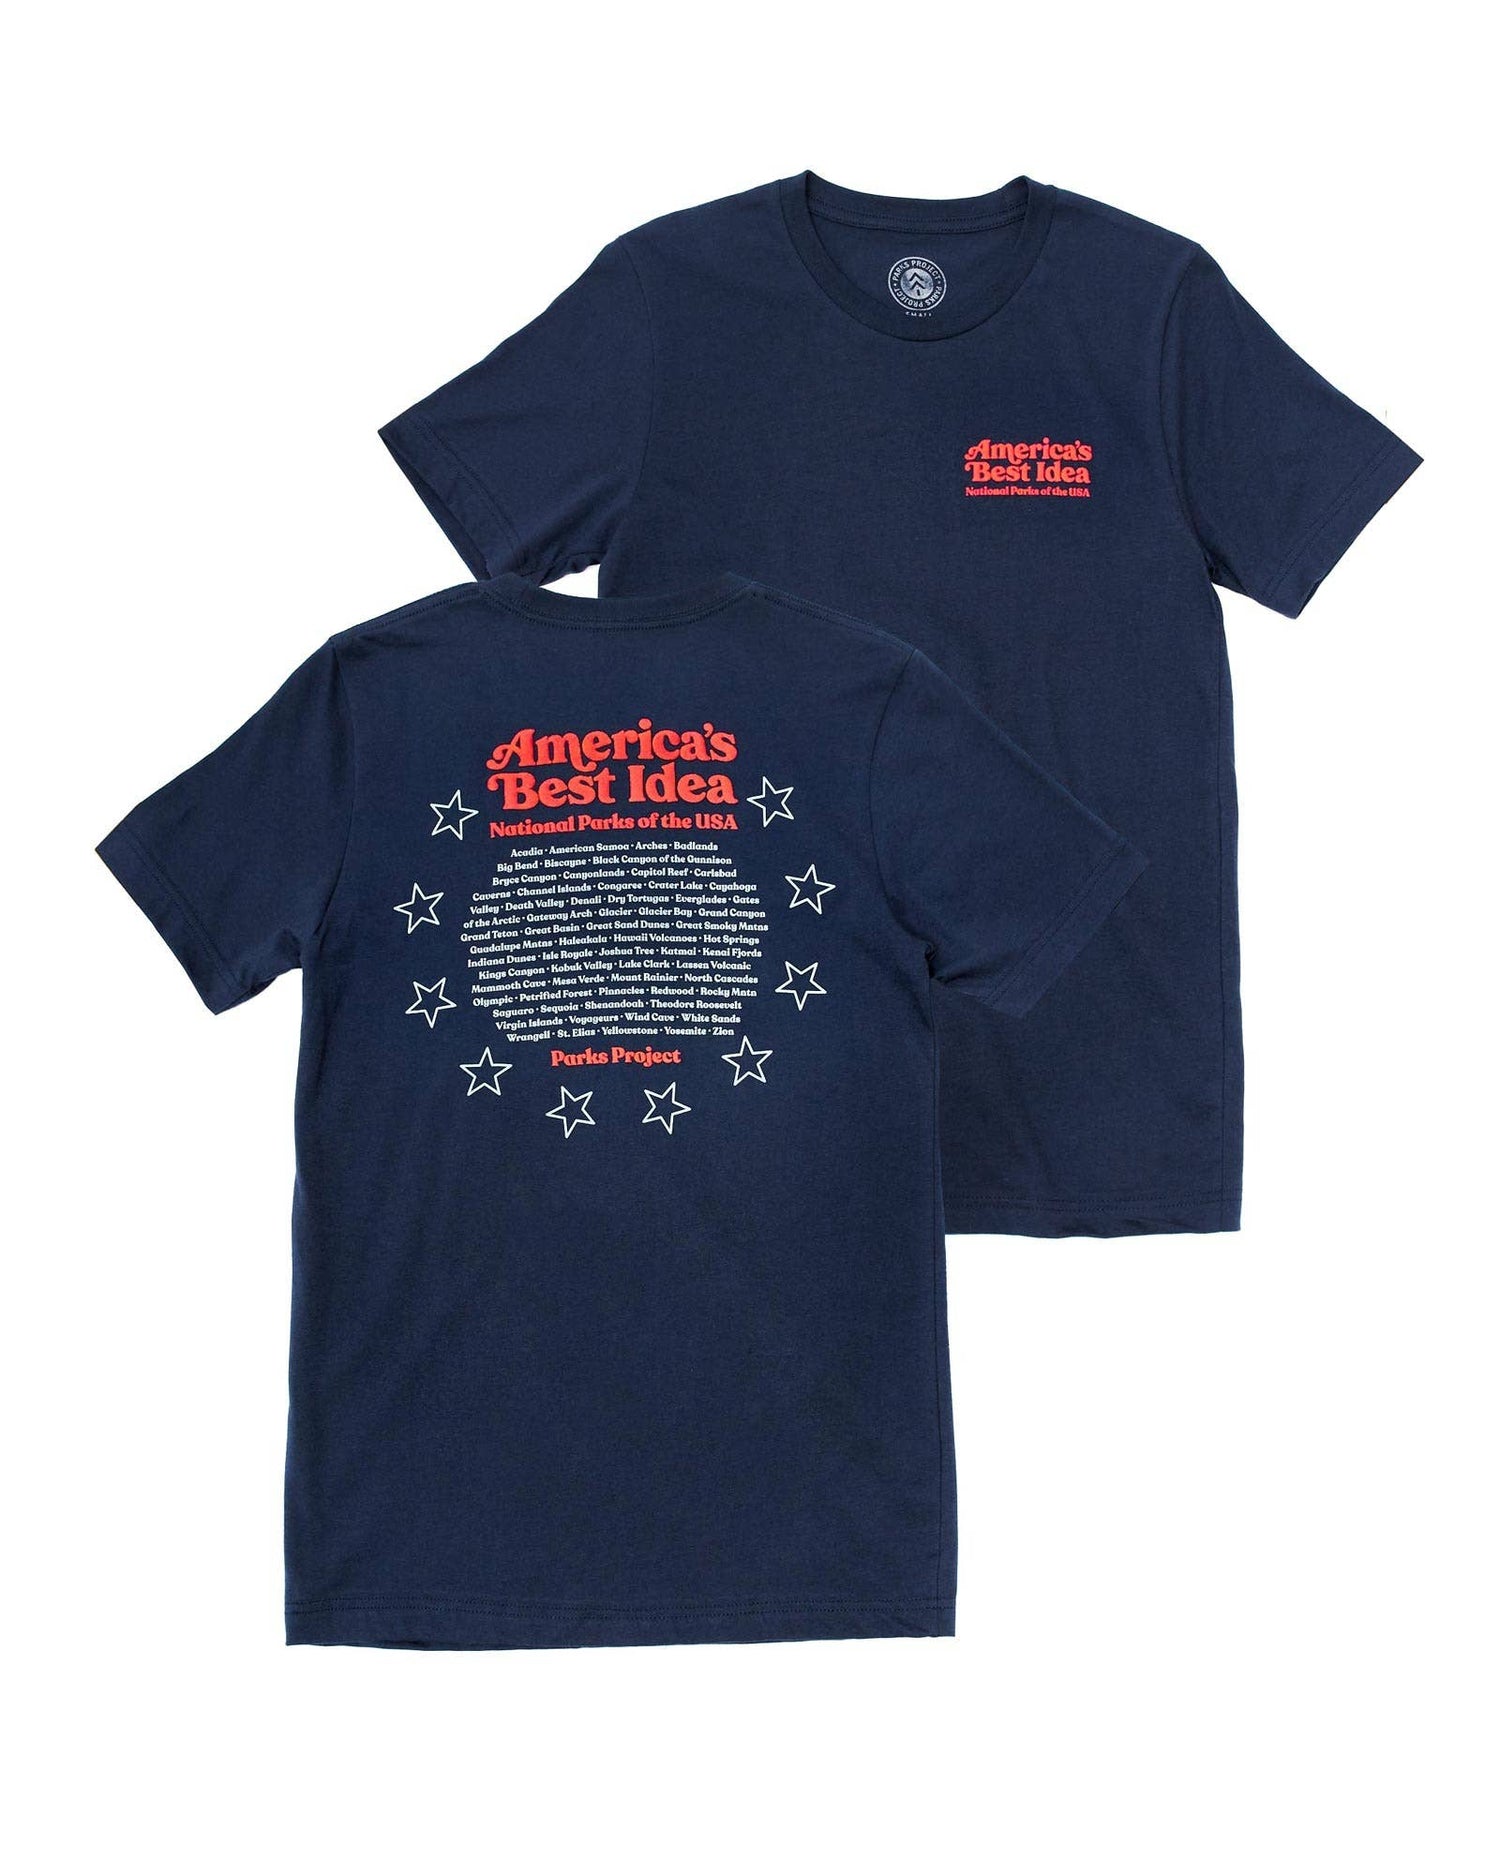 America's Best Idea puffy navy blue shirt